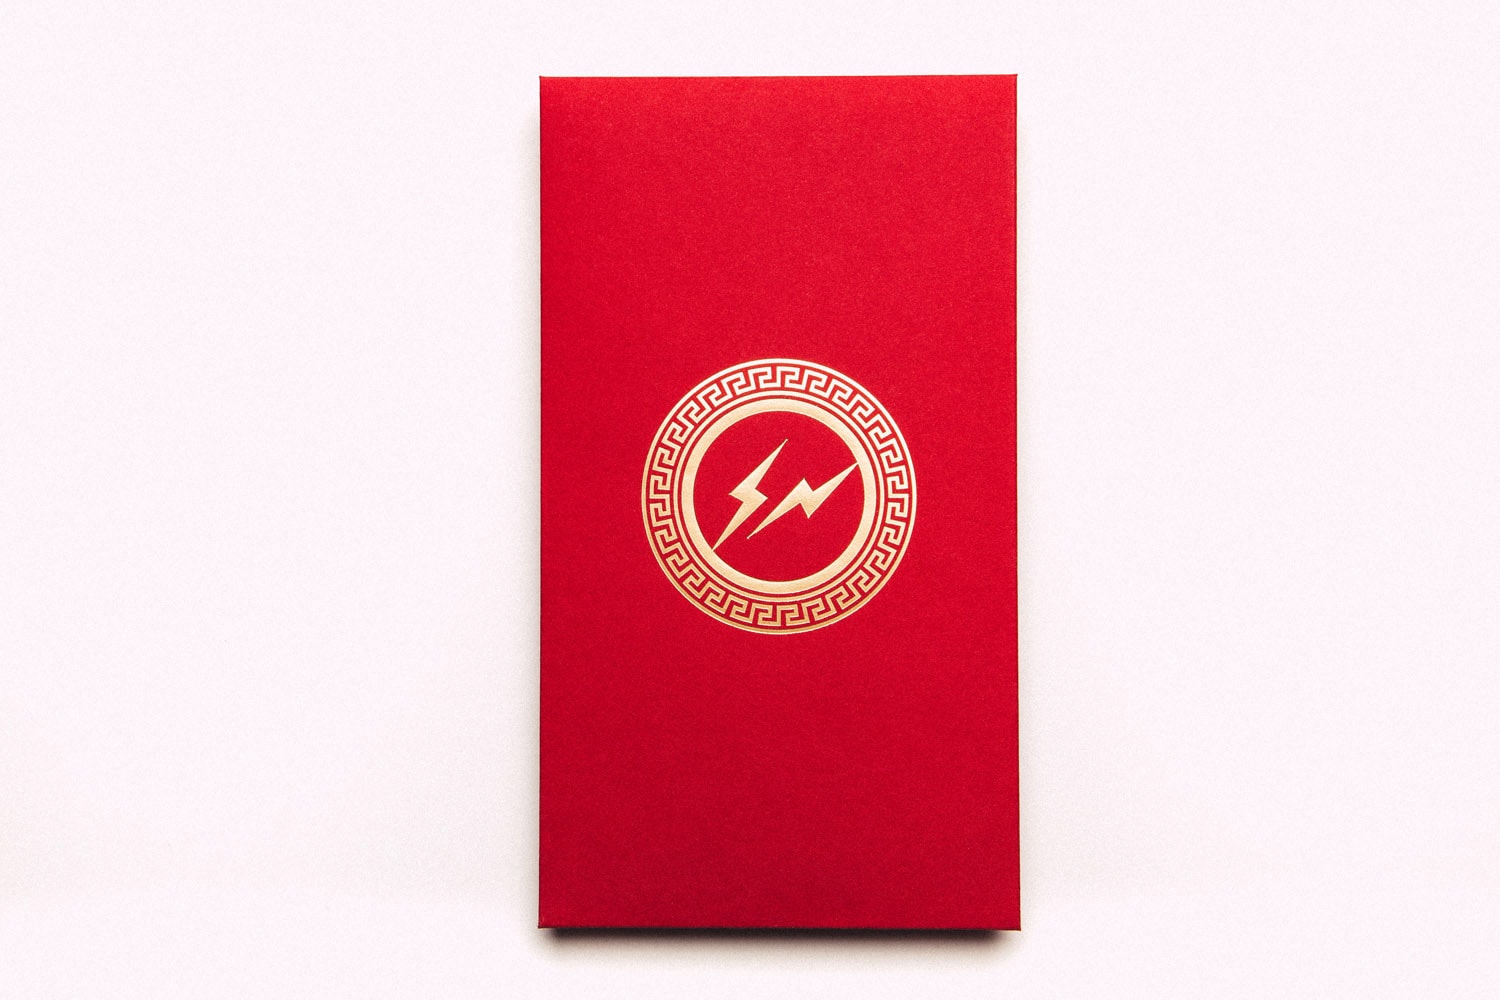 HBX Limited-Edition Lunar New Year Envelopes Red Pocket Stone Island Mastermind World Fragment Design Chinese New Year